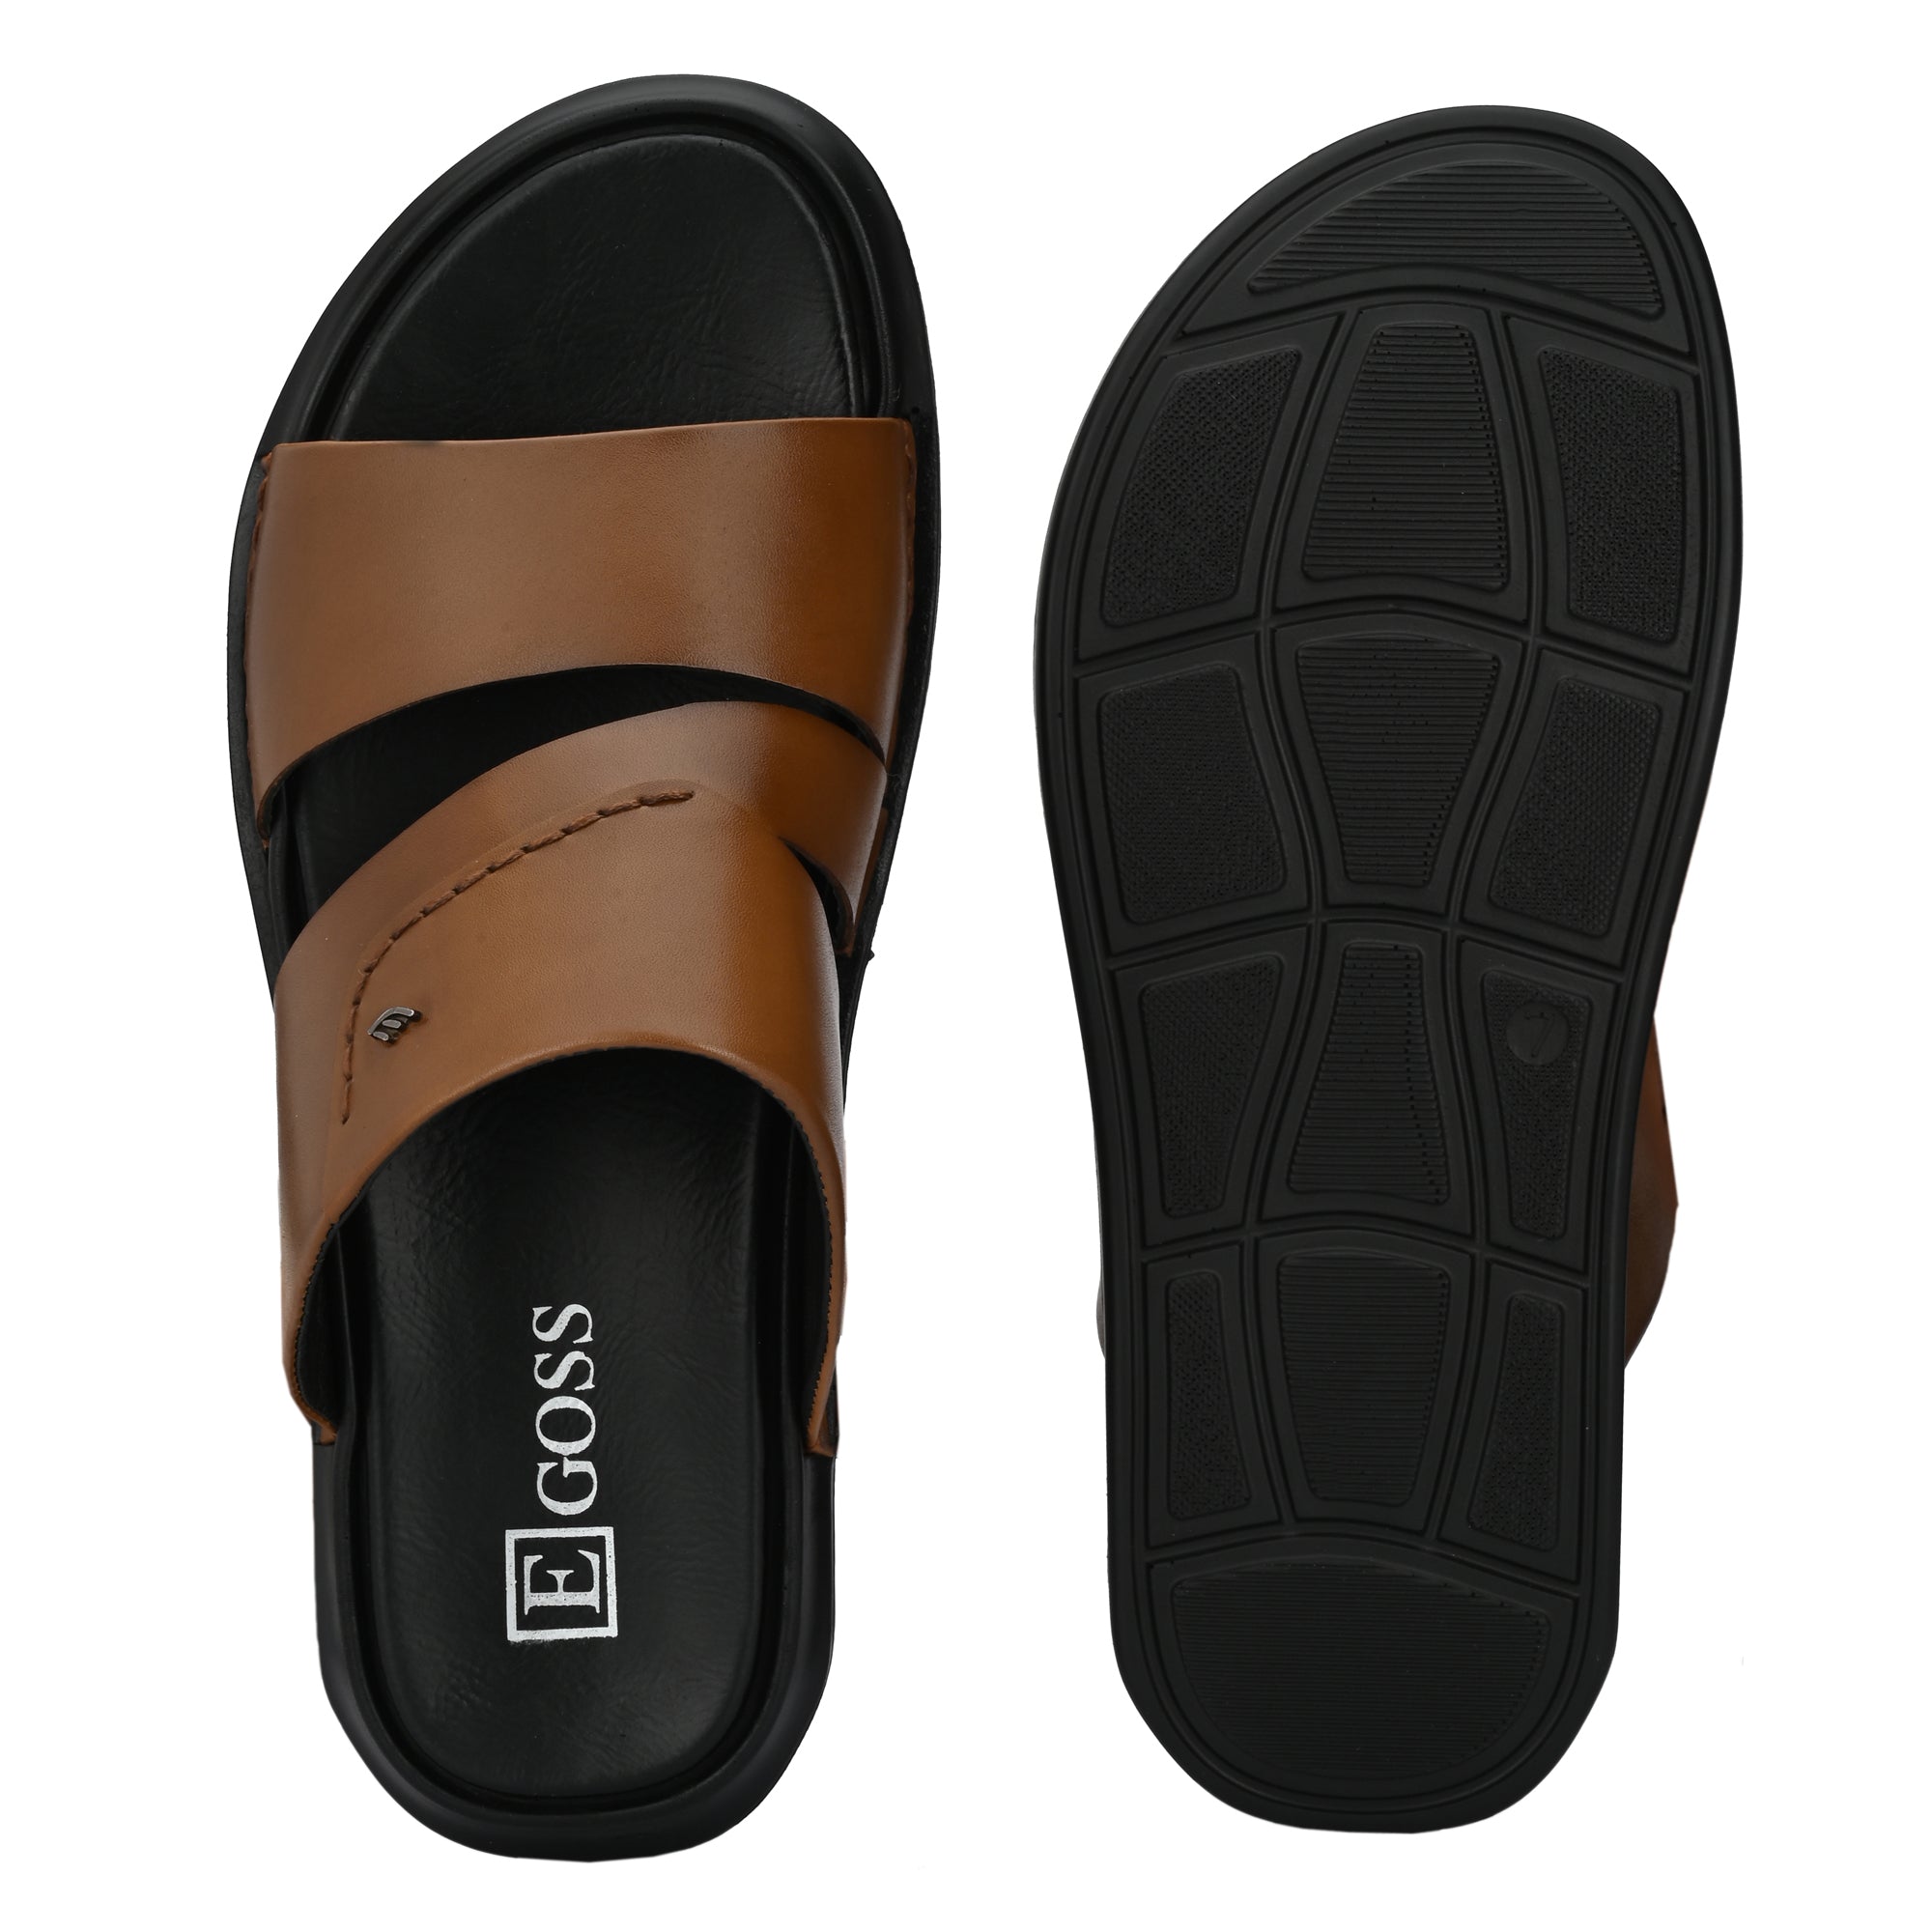 Hugo Boss 50474973 Titanium-R Slid_rb Men's Clogs Sandals Blue Slide Shoes  | eBay